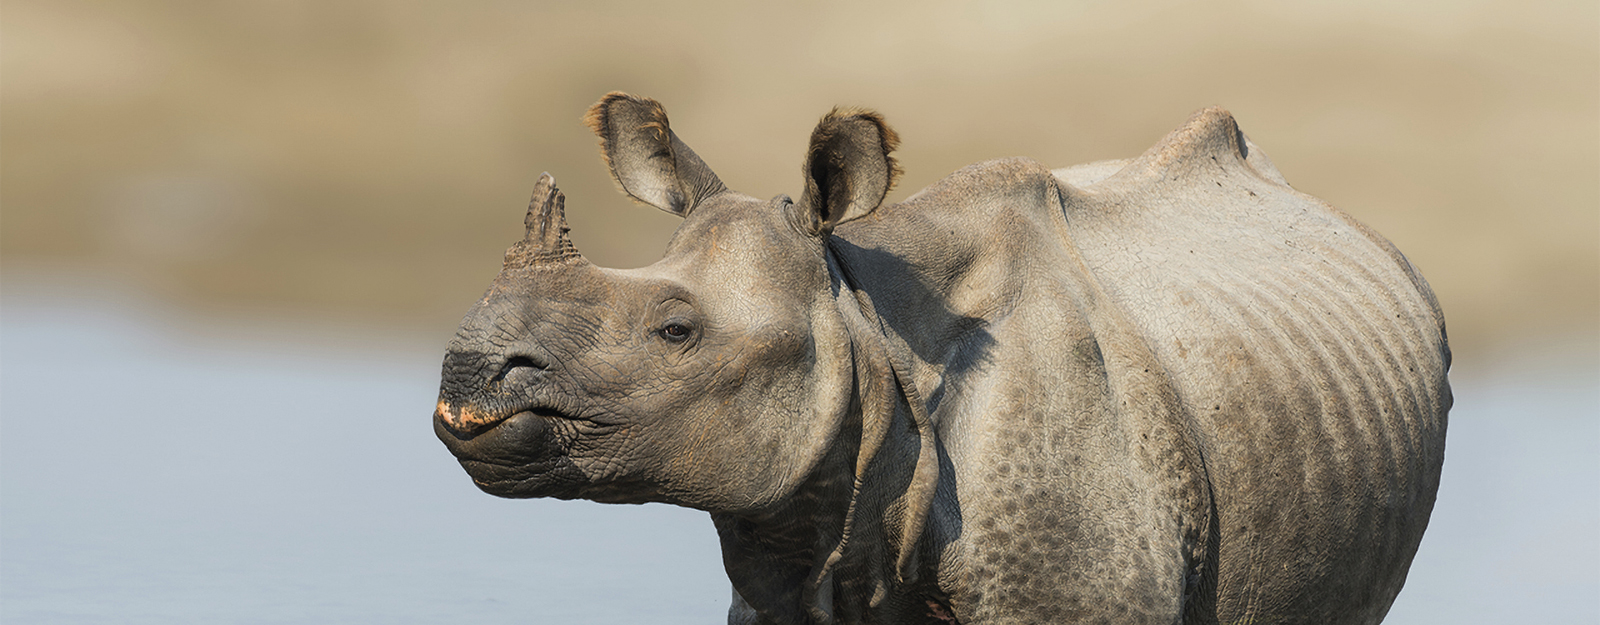 Greater One-Horned Rhino | International Rhino Foundation